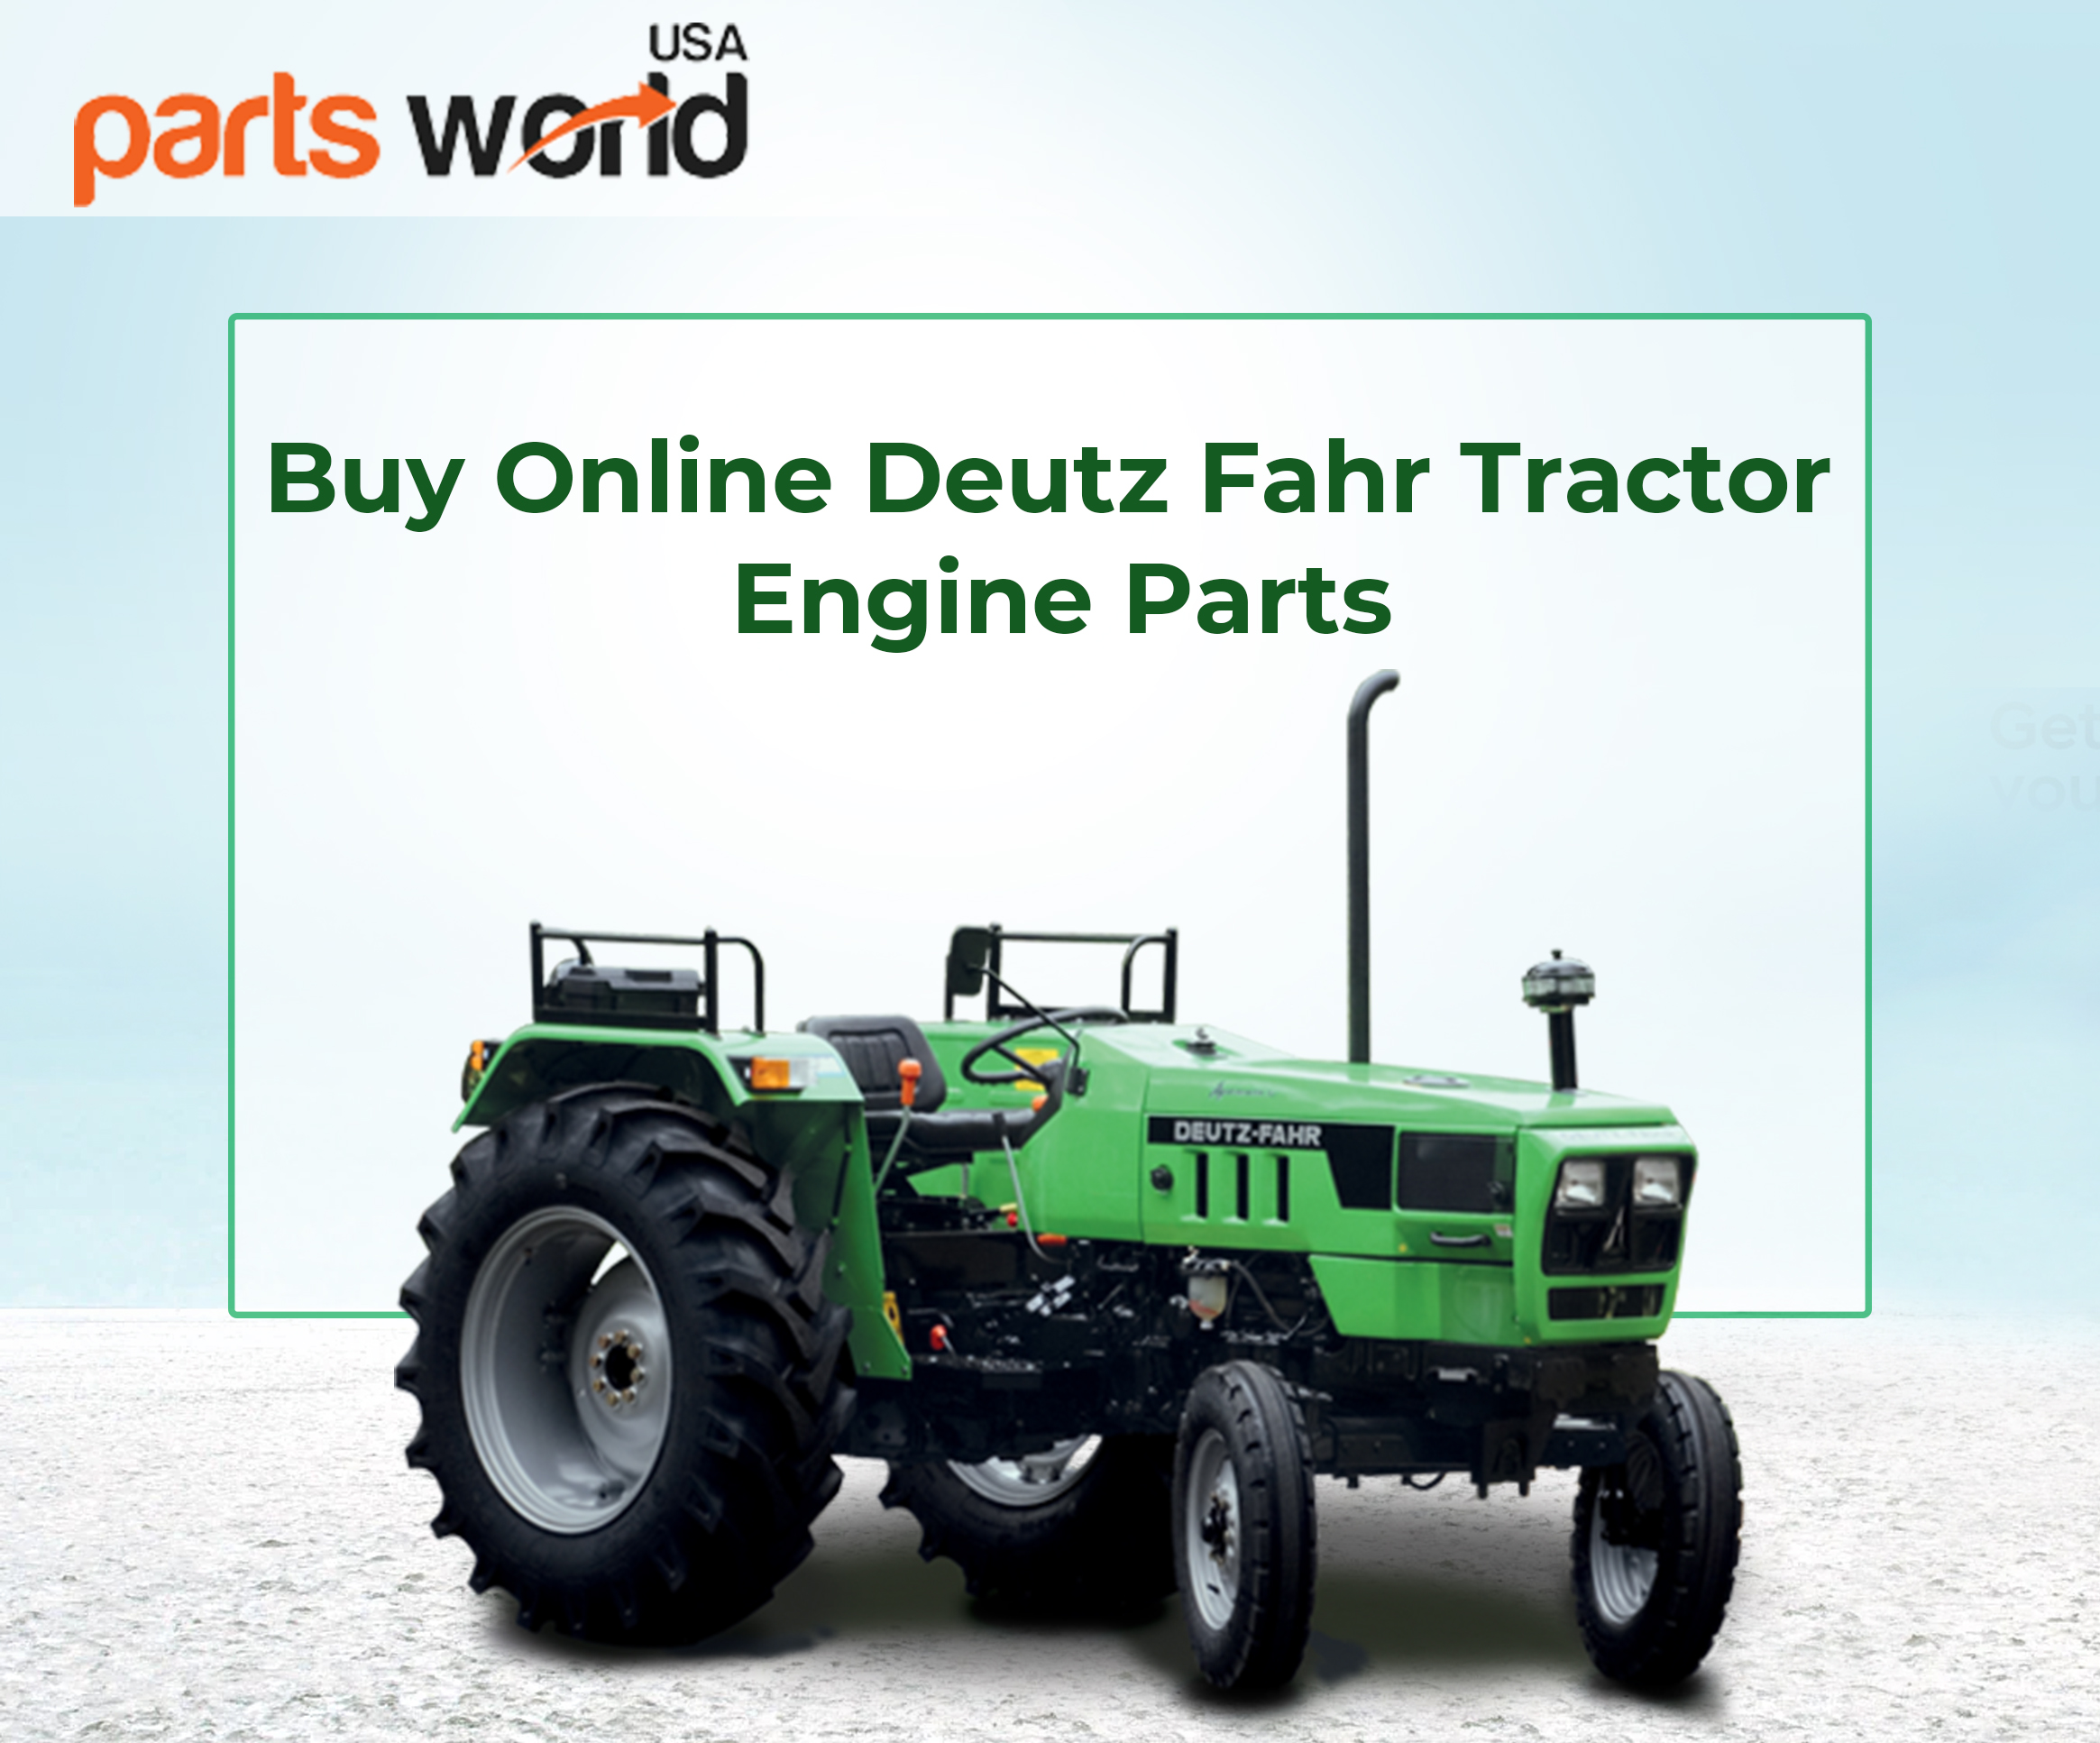 Buy Online Deutz Fahr Tractor Engine Parts